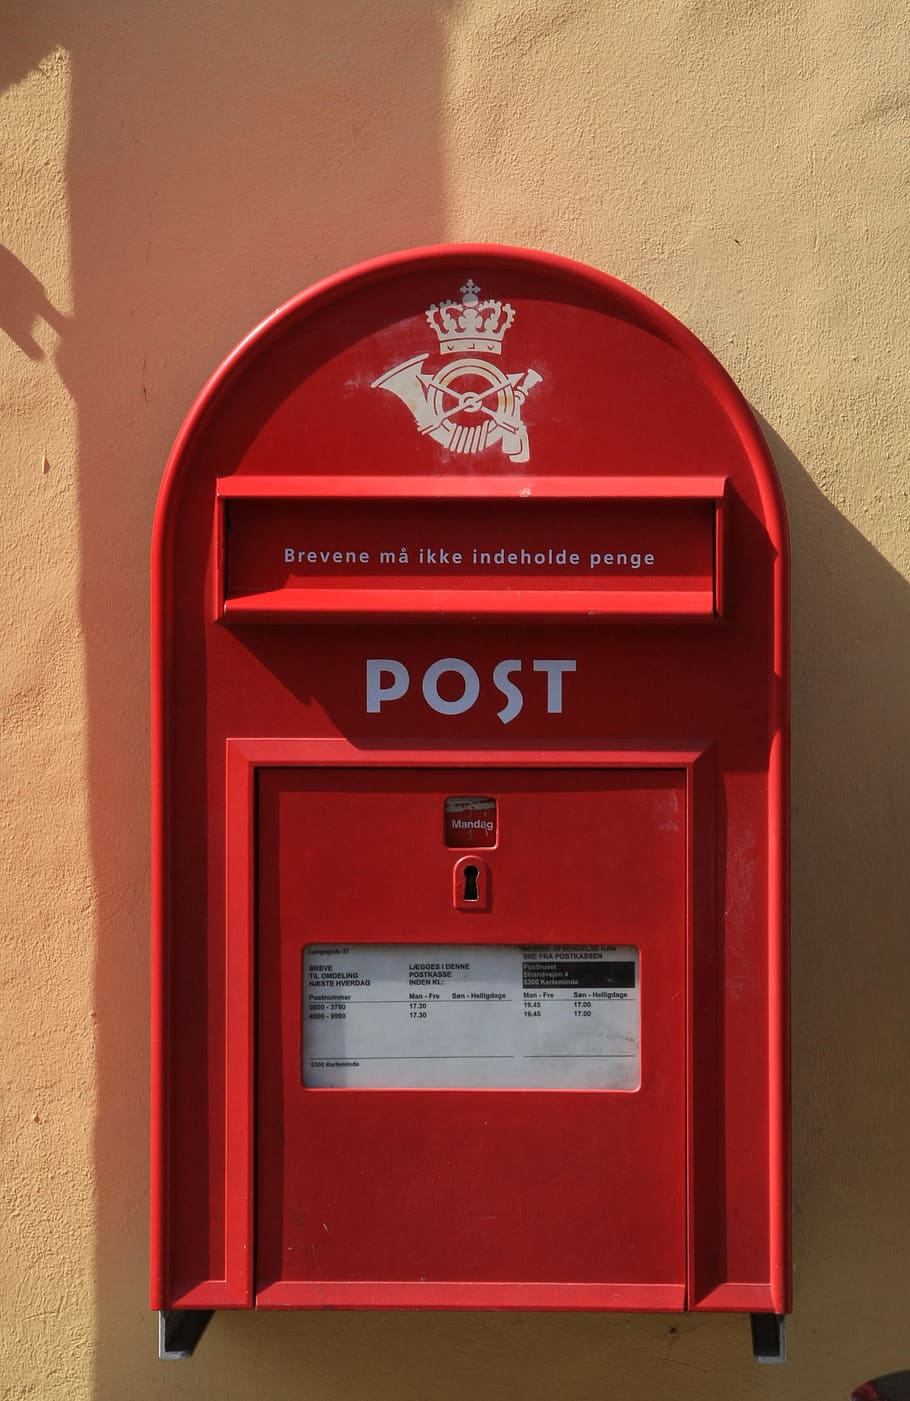 Postbox, Mail, Mailbox, Post, Box, vermelho, postar, caixa, carta, letterbox